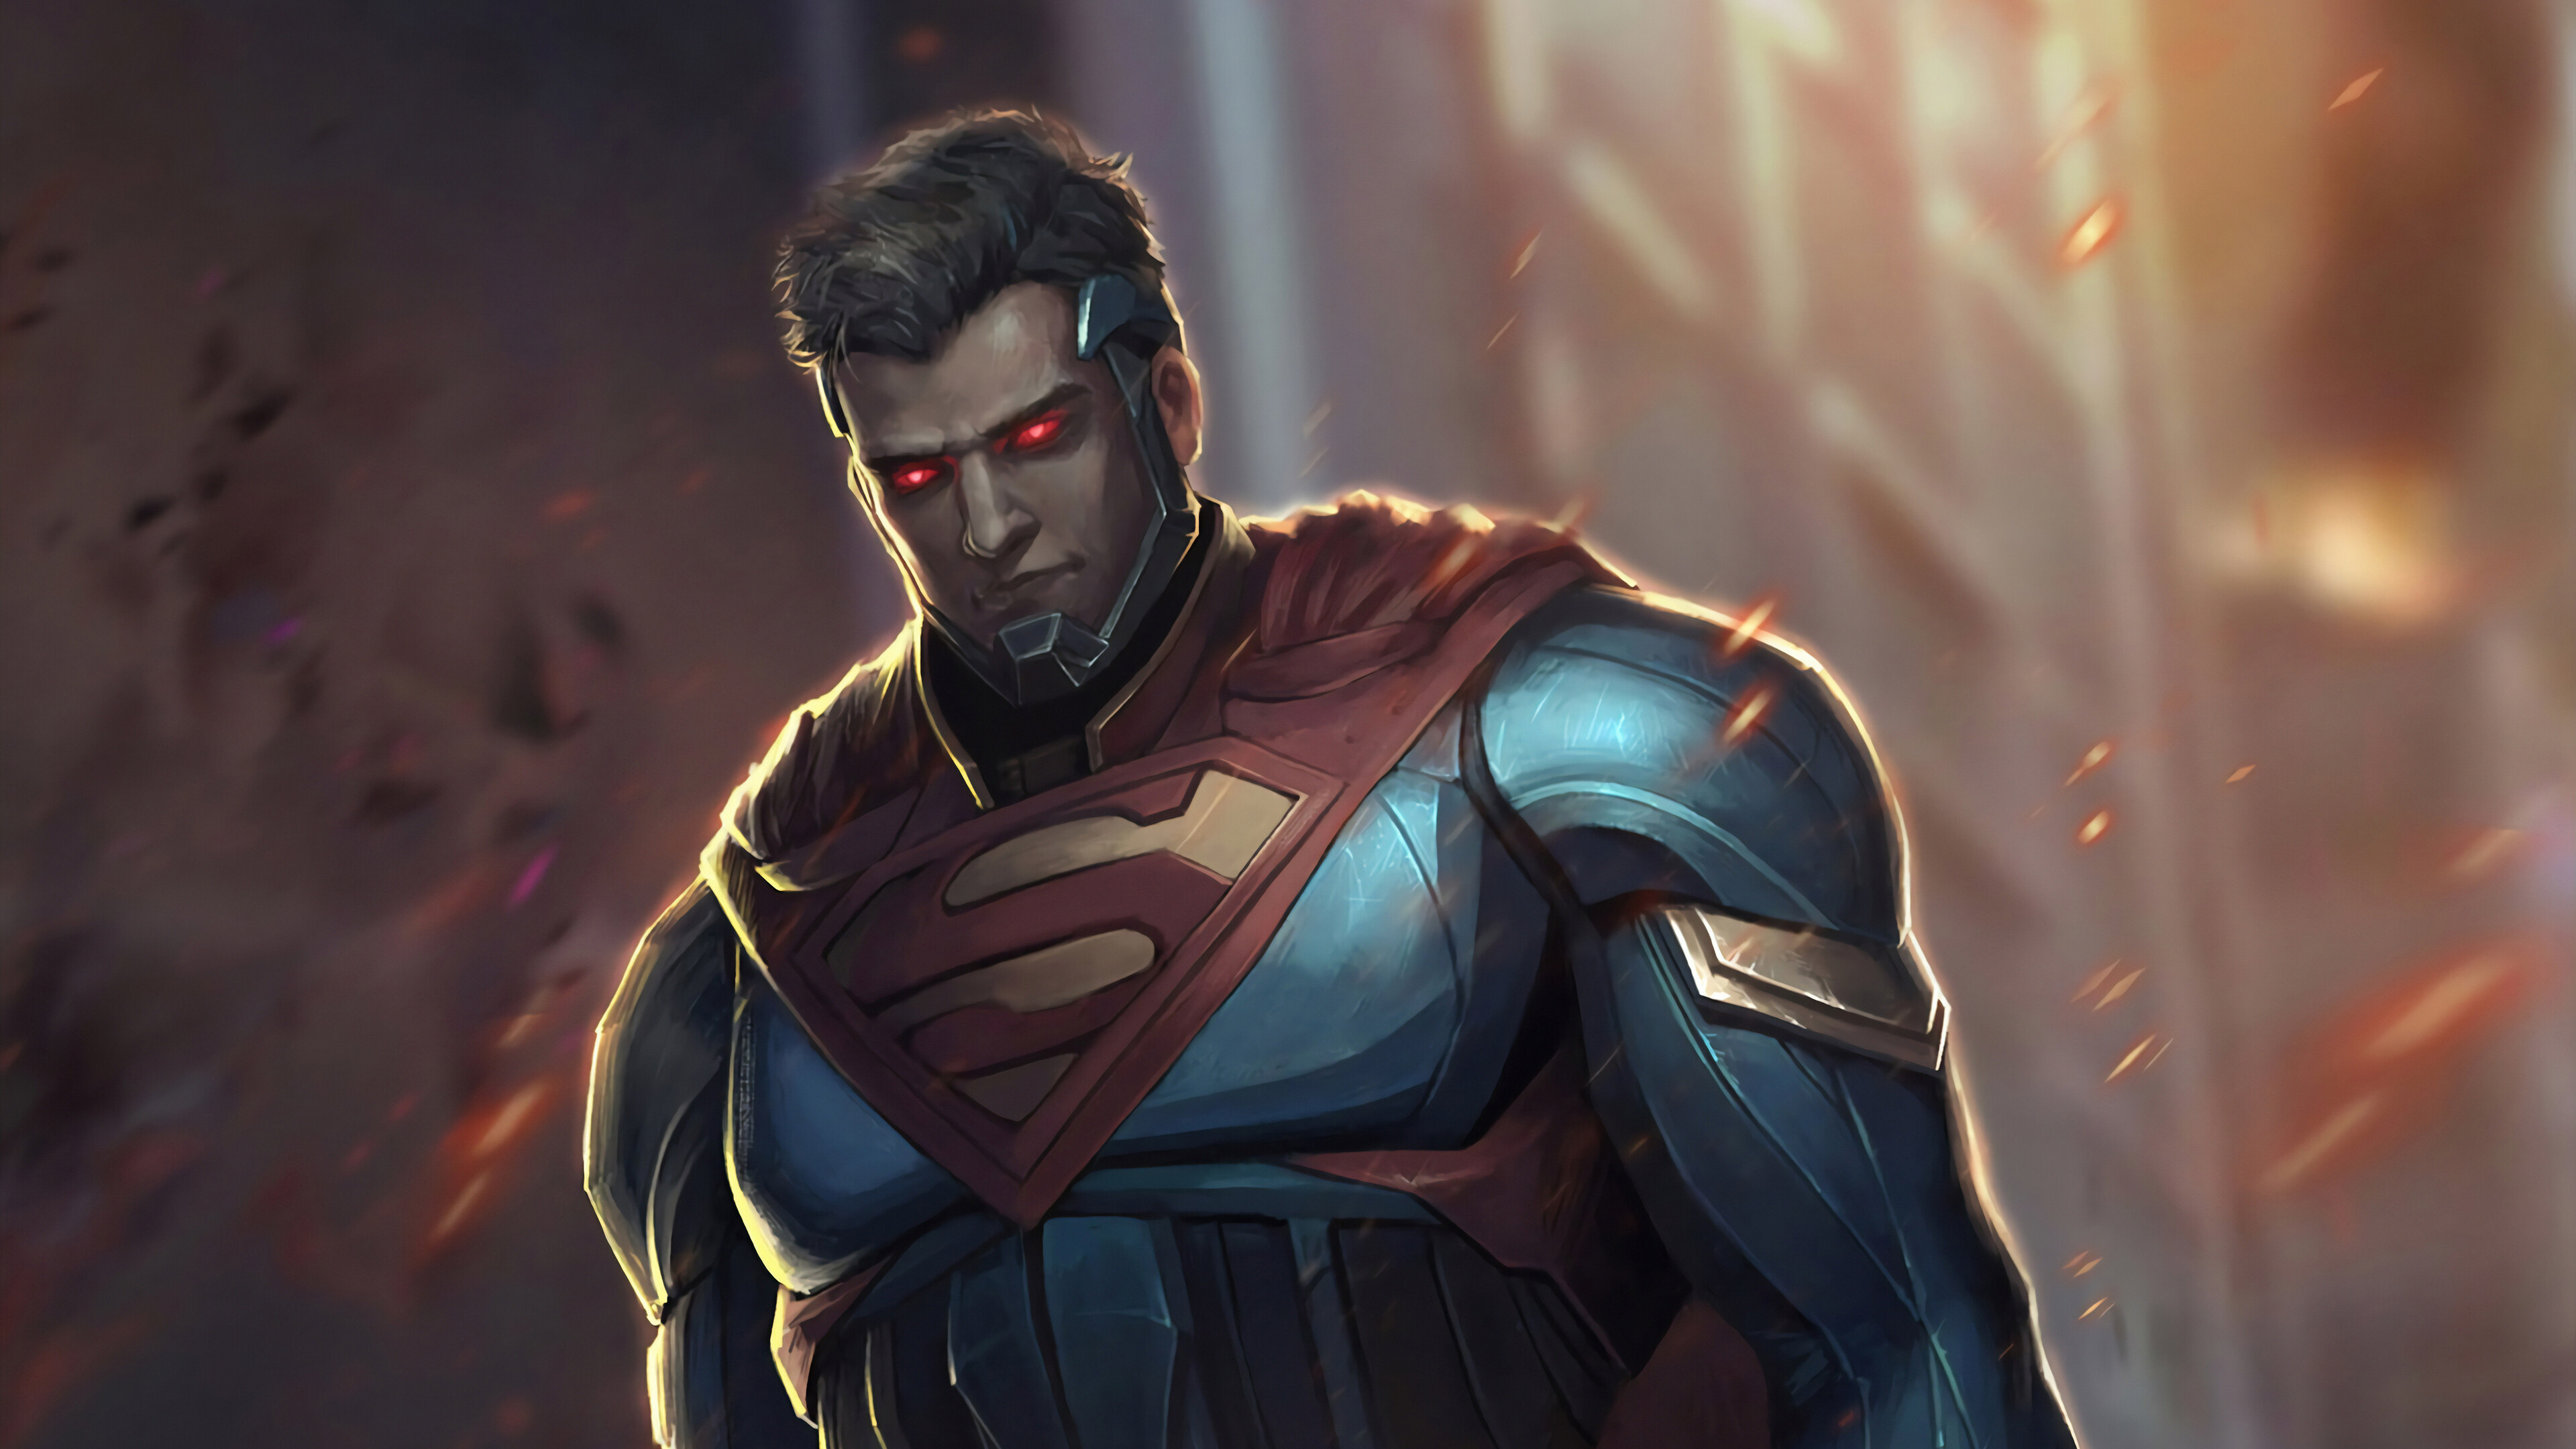 Superman, Injustice Wallpaper, 3840x2160 4K Desktop